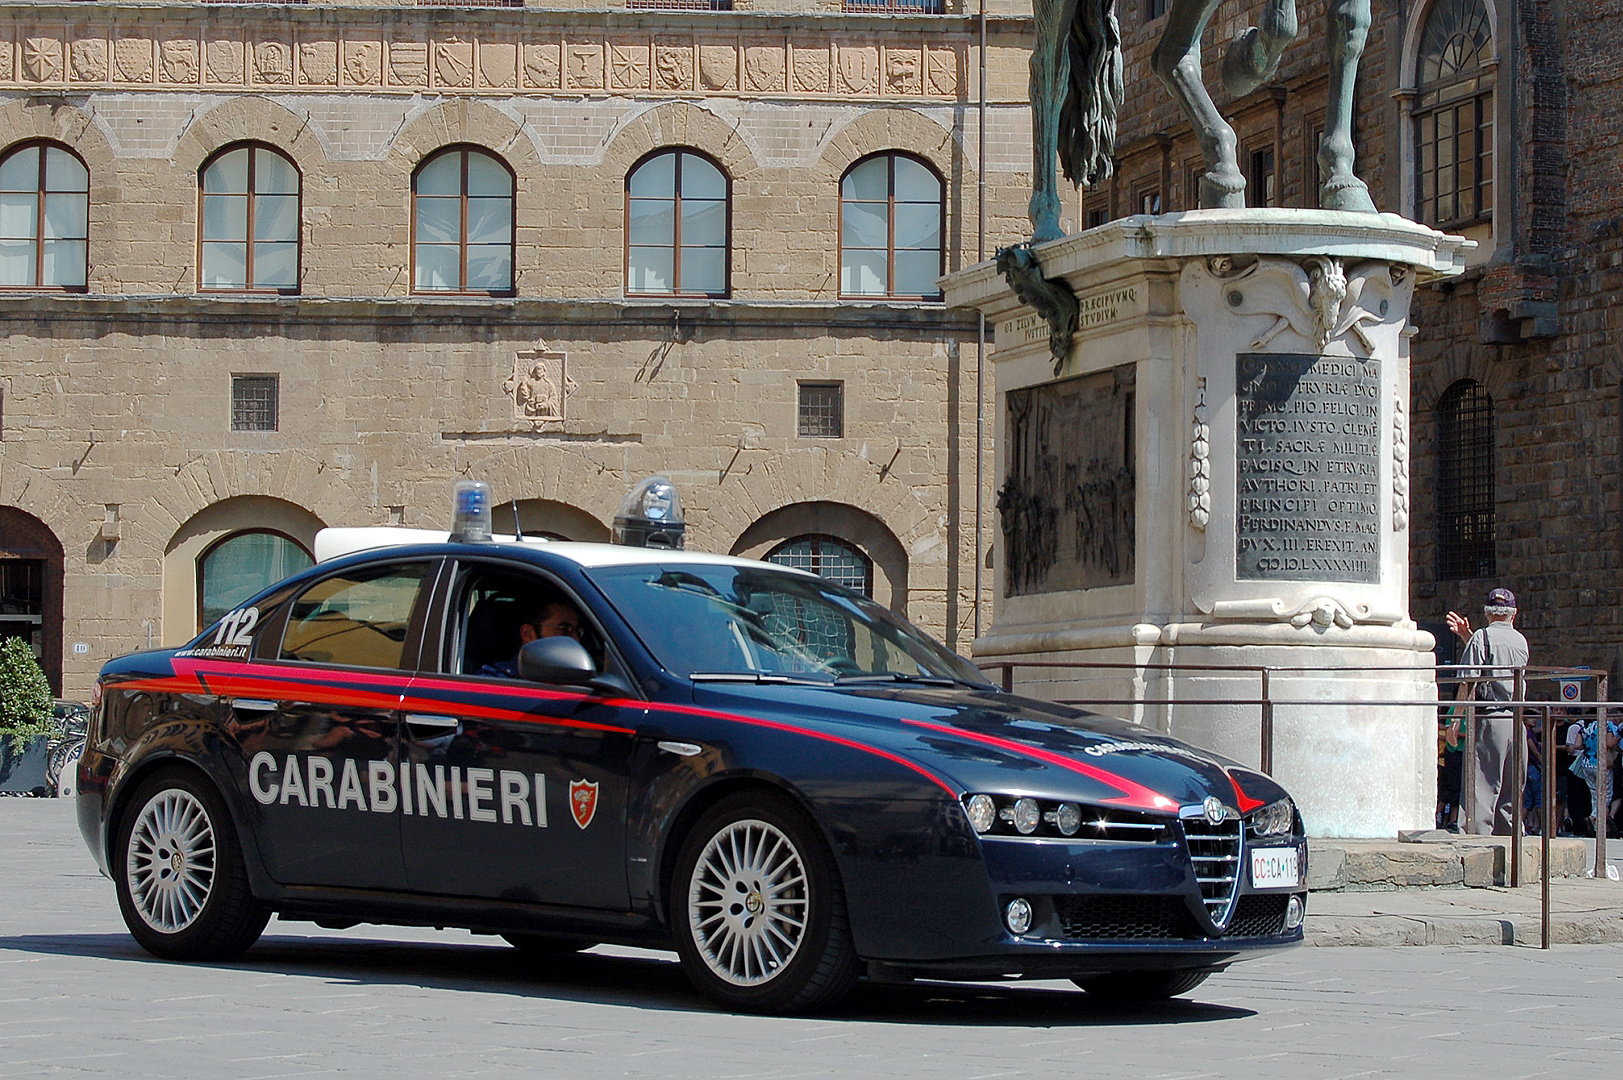 Alfa 159 Carabinieri (Florence, Itali), Alfa 159 Carabinieri (Florence, Italy)